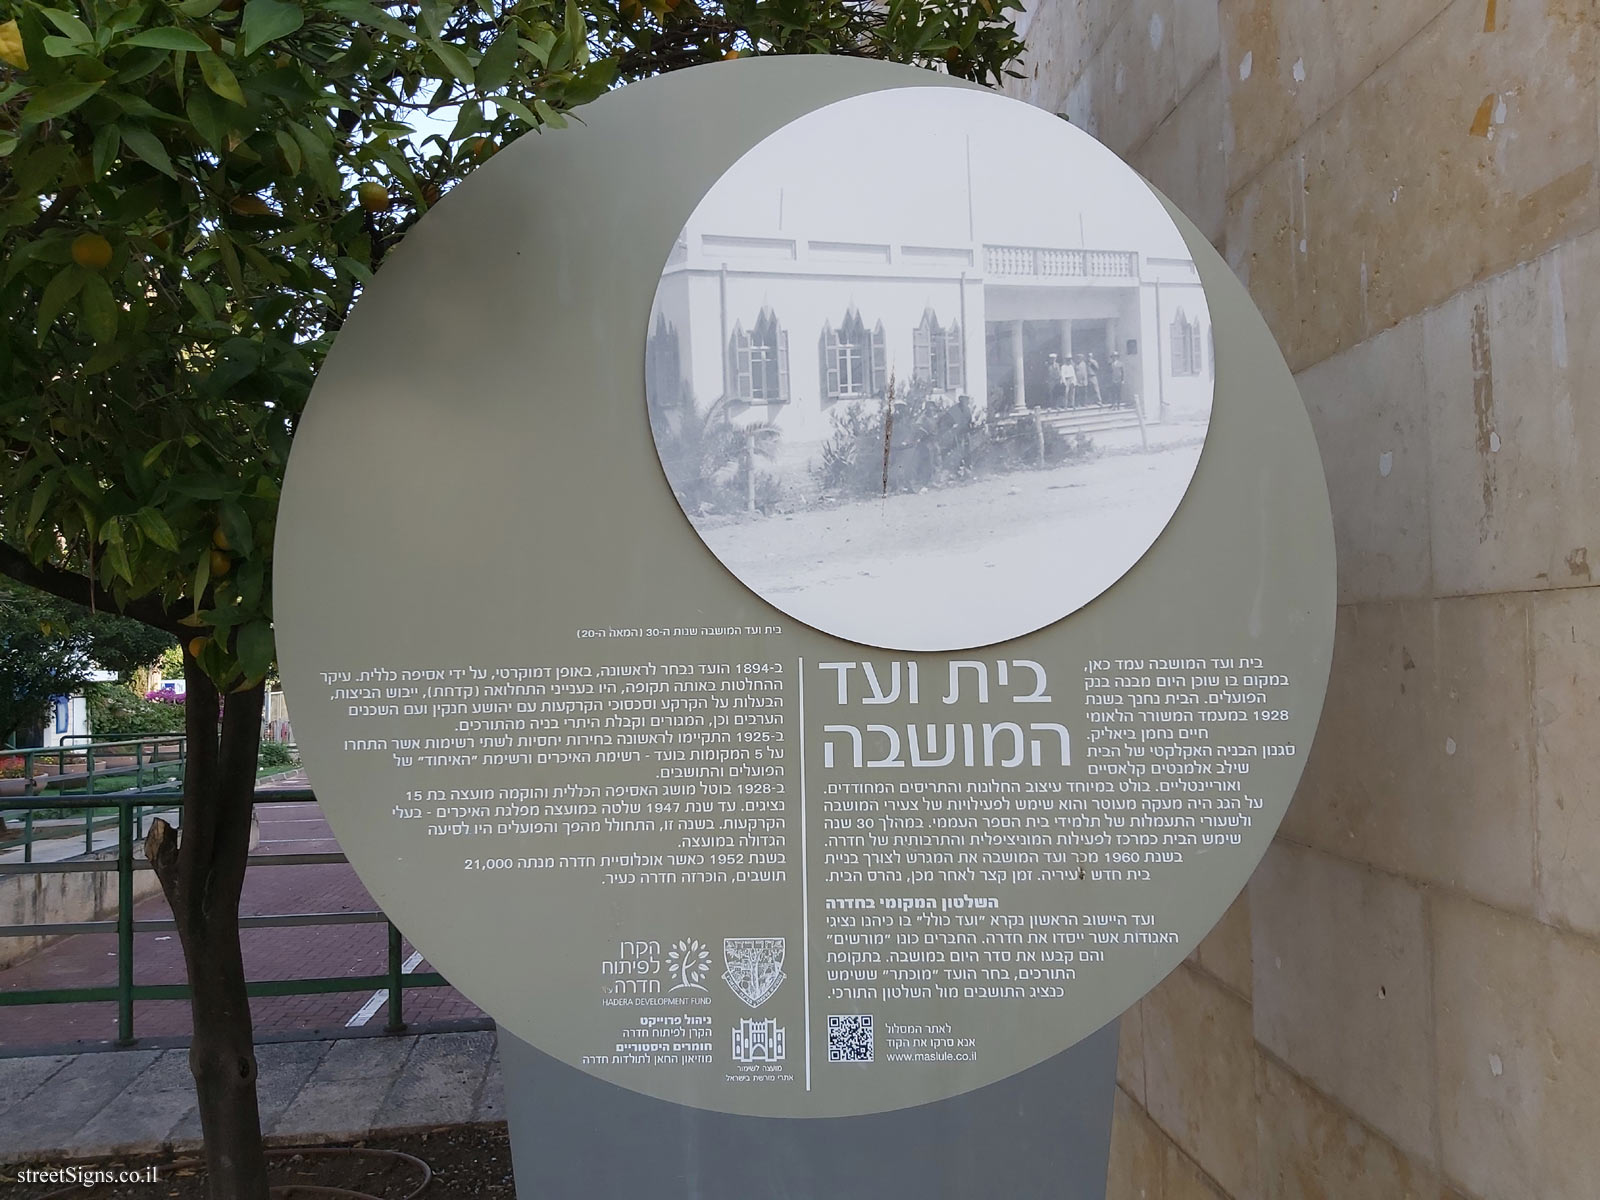 Hadera - The eucalyptus track - House of the Colony Committee - Herbert Samuel St 70, Hadera, Israel